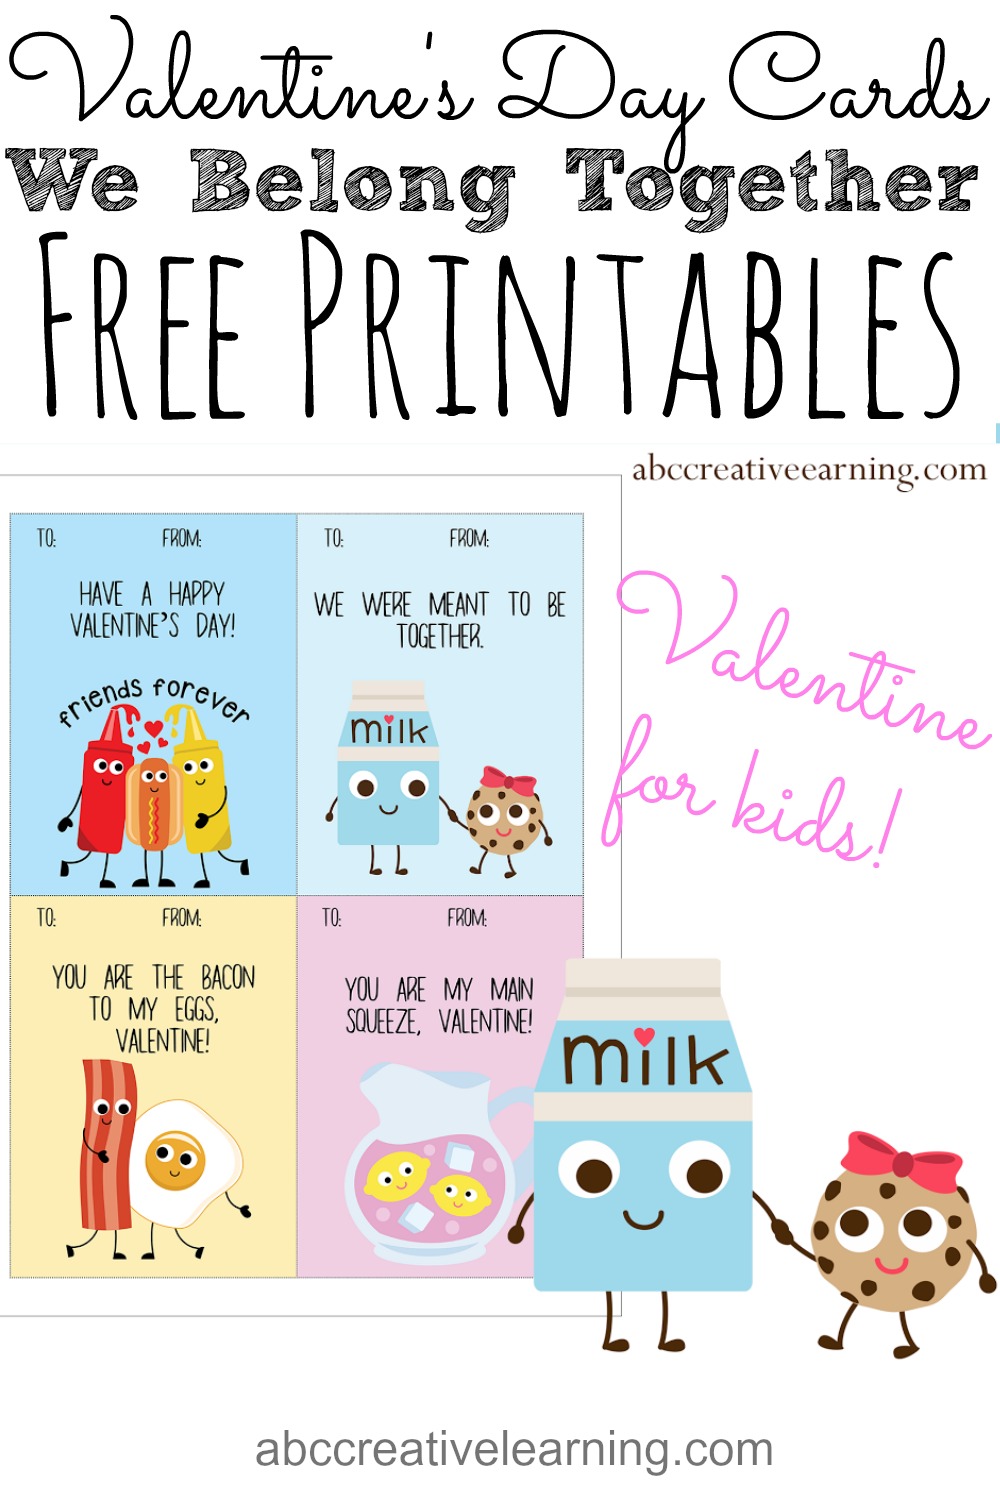 Valentine Basket for Kids and Free Valentine Card Printable